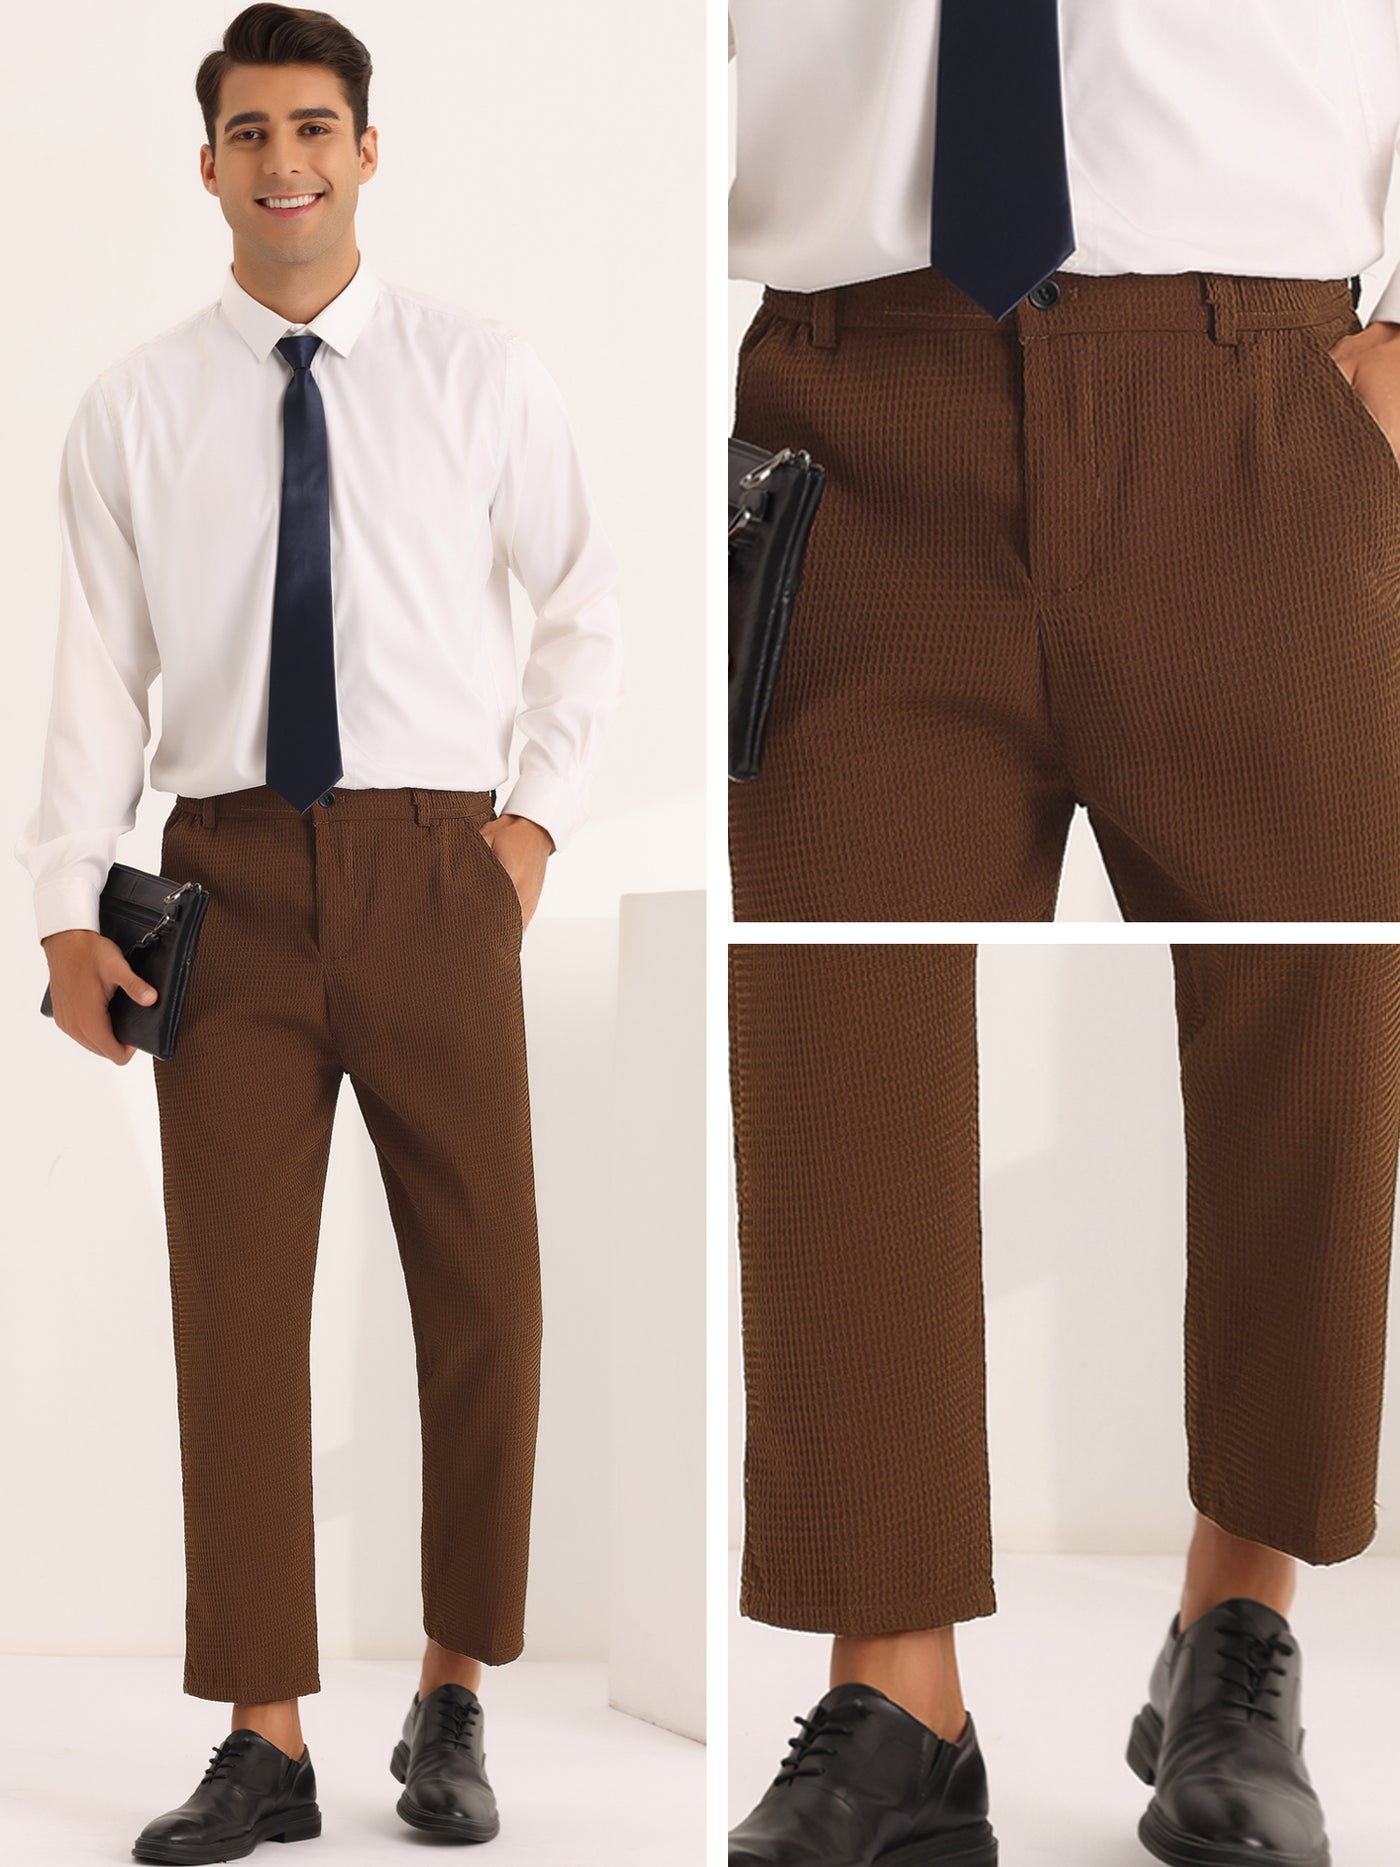 Bublédon Men's Solid Flat Front Waffle Ankle Length Dress Pants